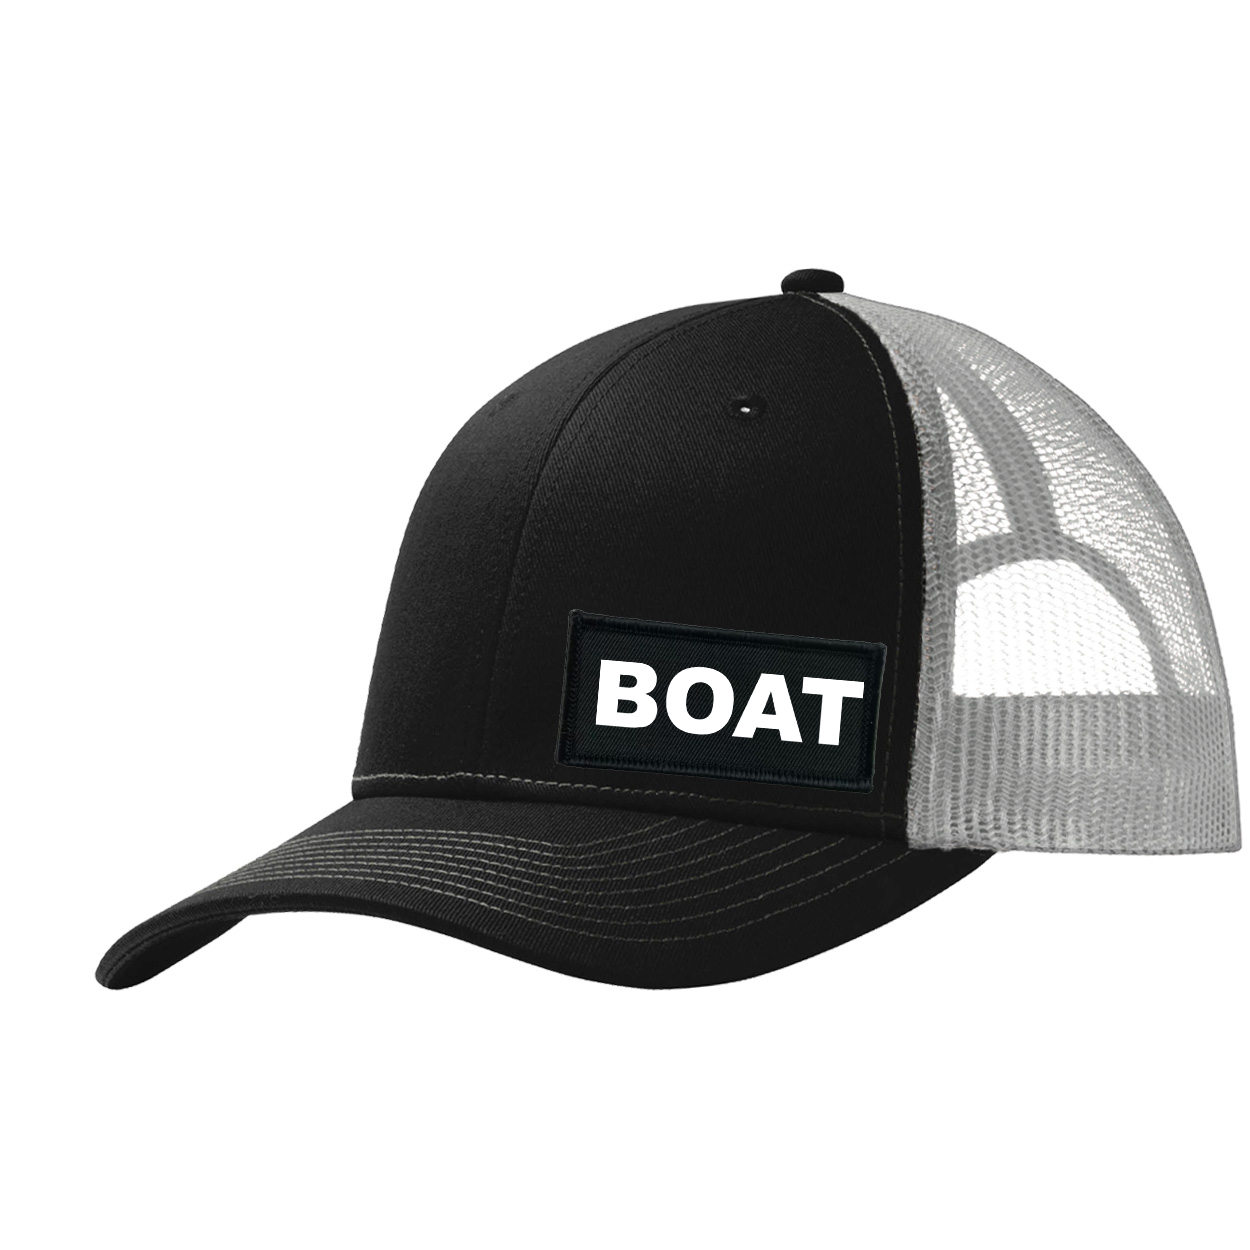 Boat Brand Logo Night Out Woven Patch Snapback Trucker Hat Black/Gray